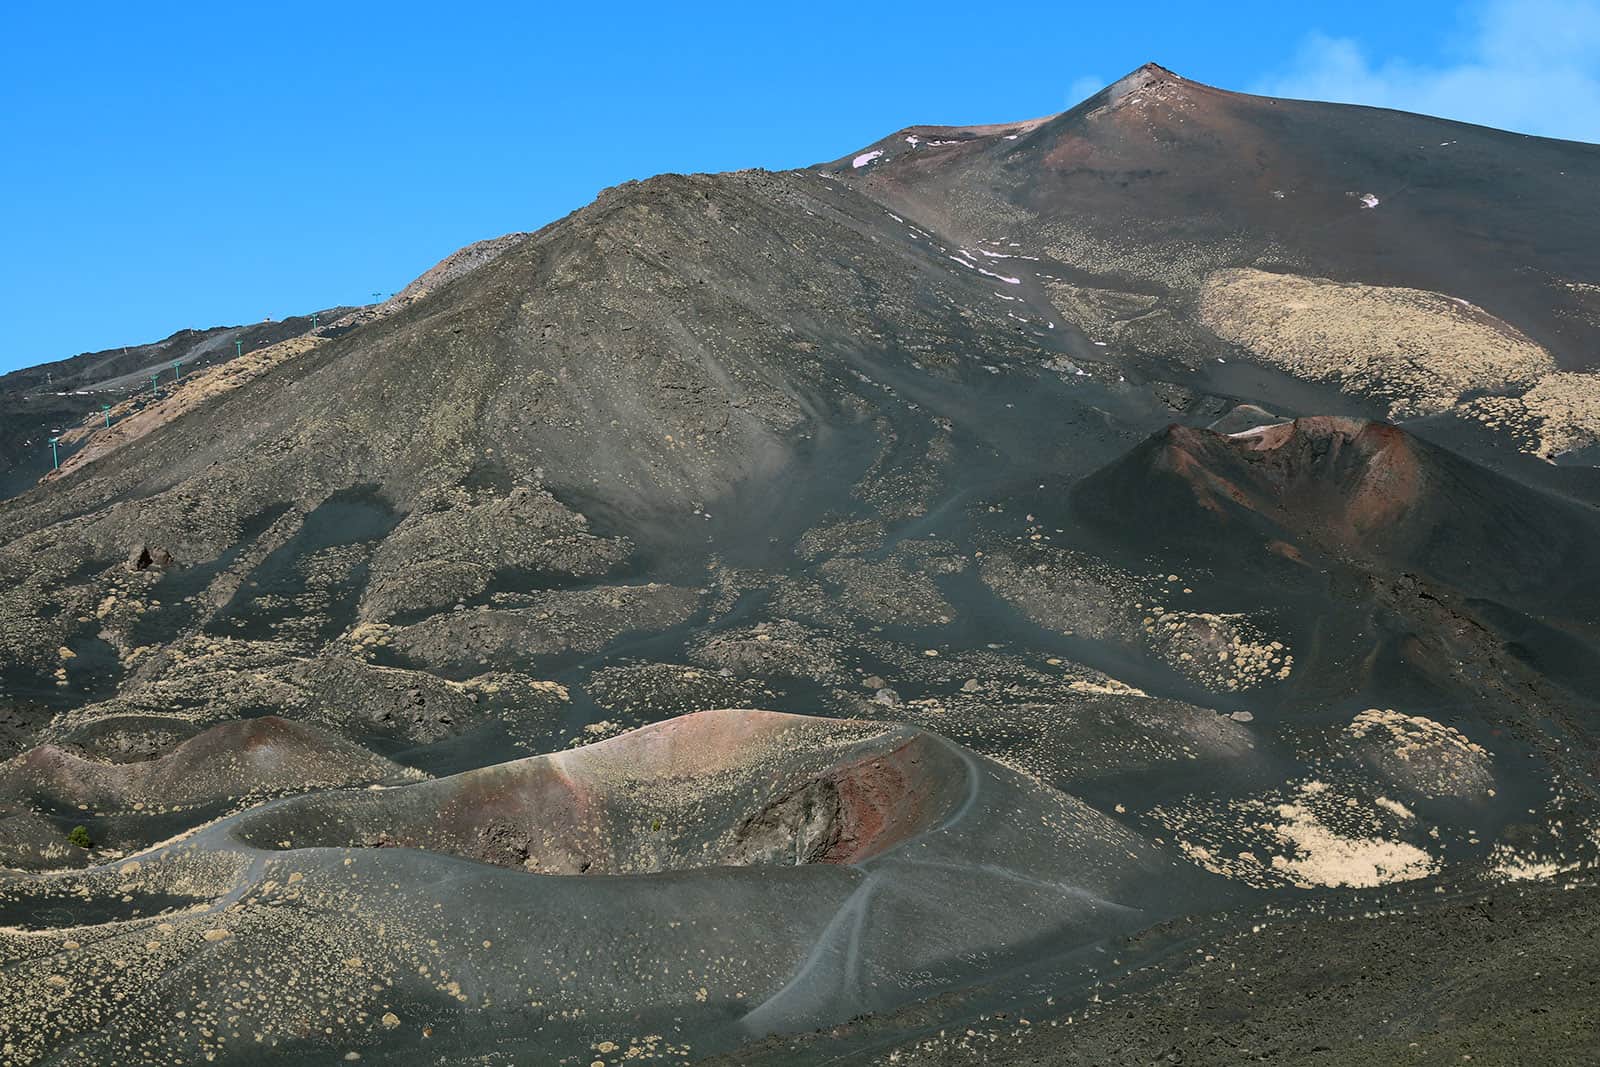 Main peak of the Etna volcano.